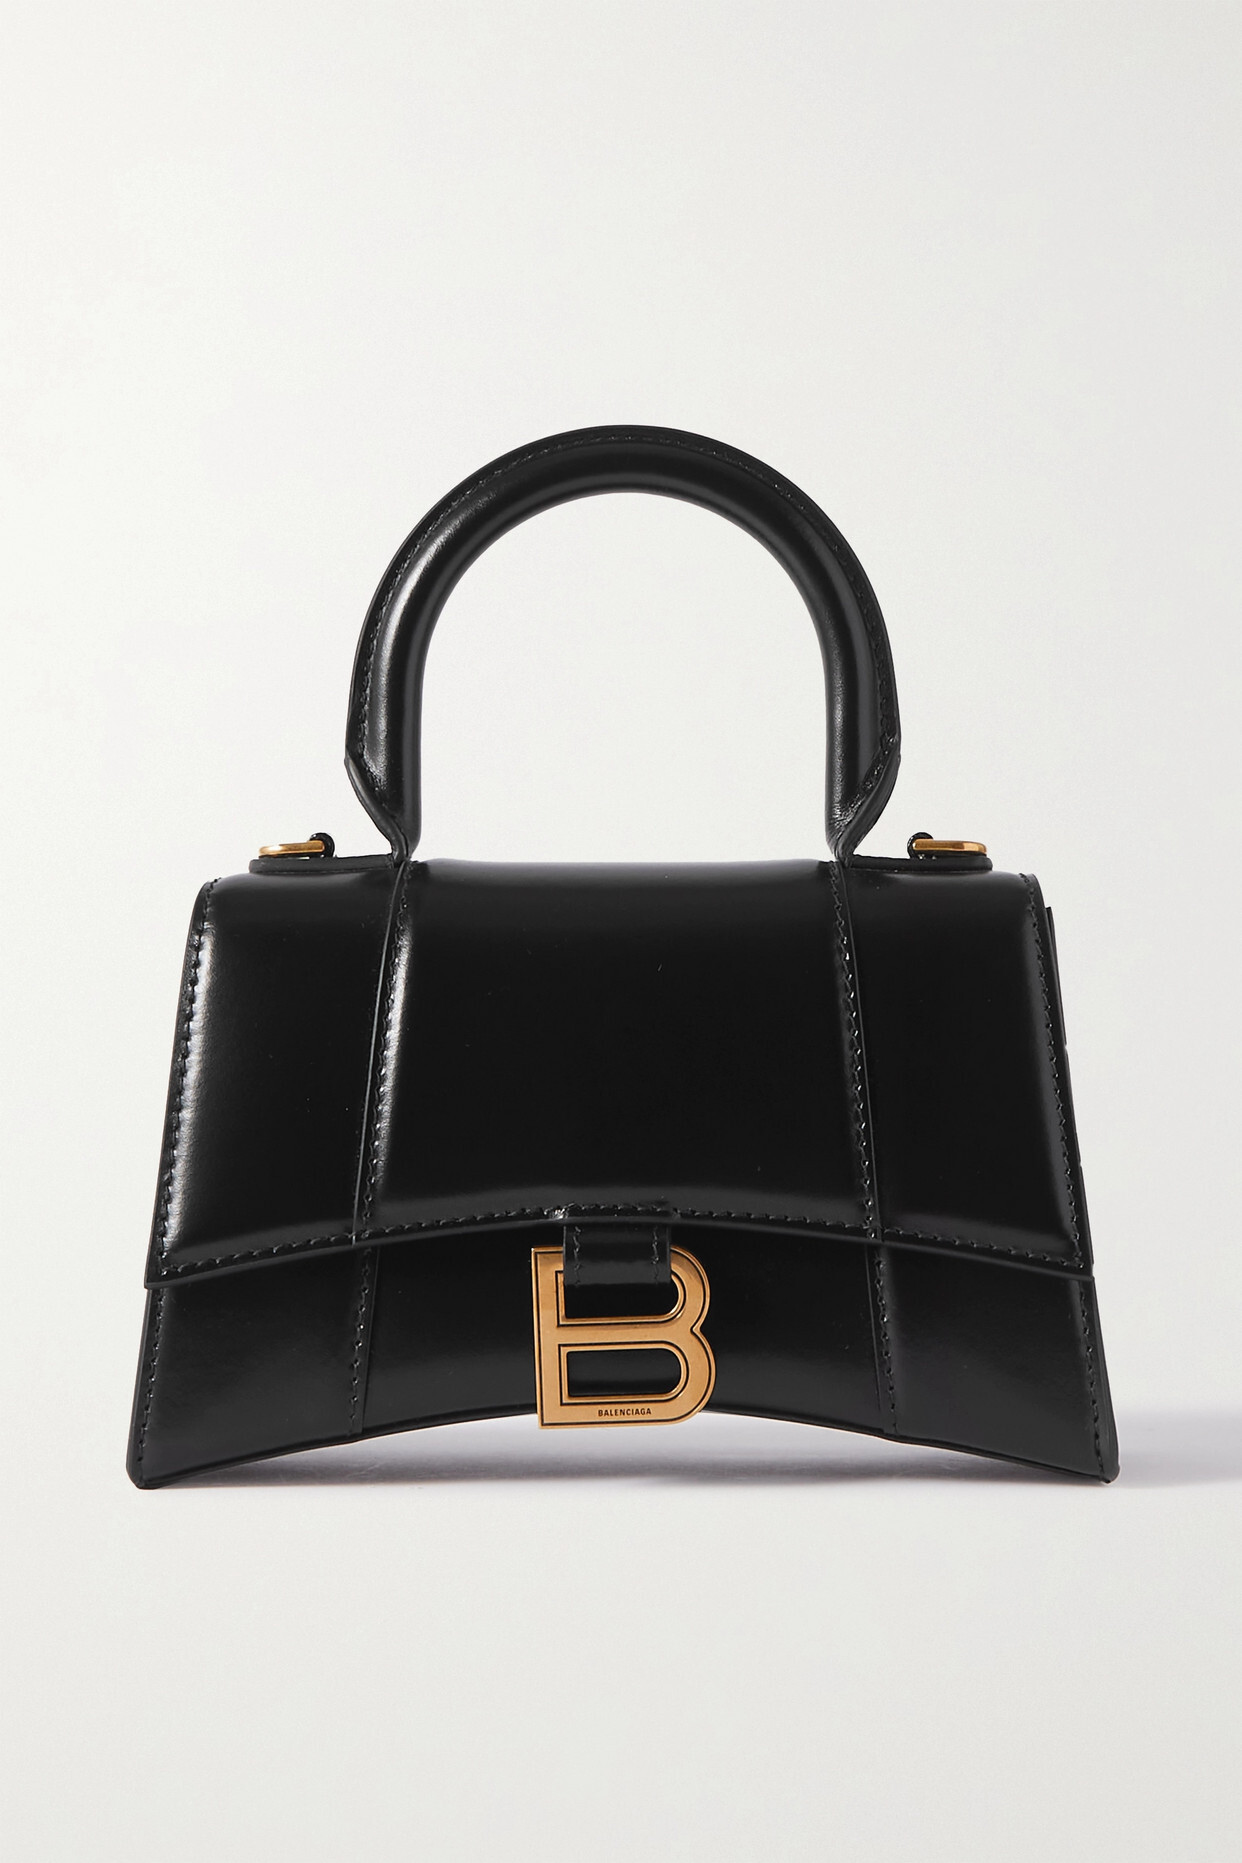 Balenciaga - Hourglass Xs Leather Tote - Black